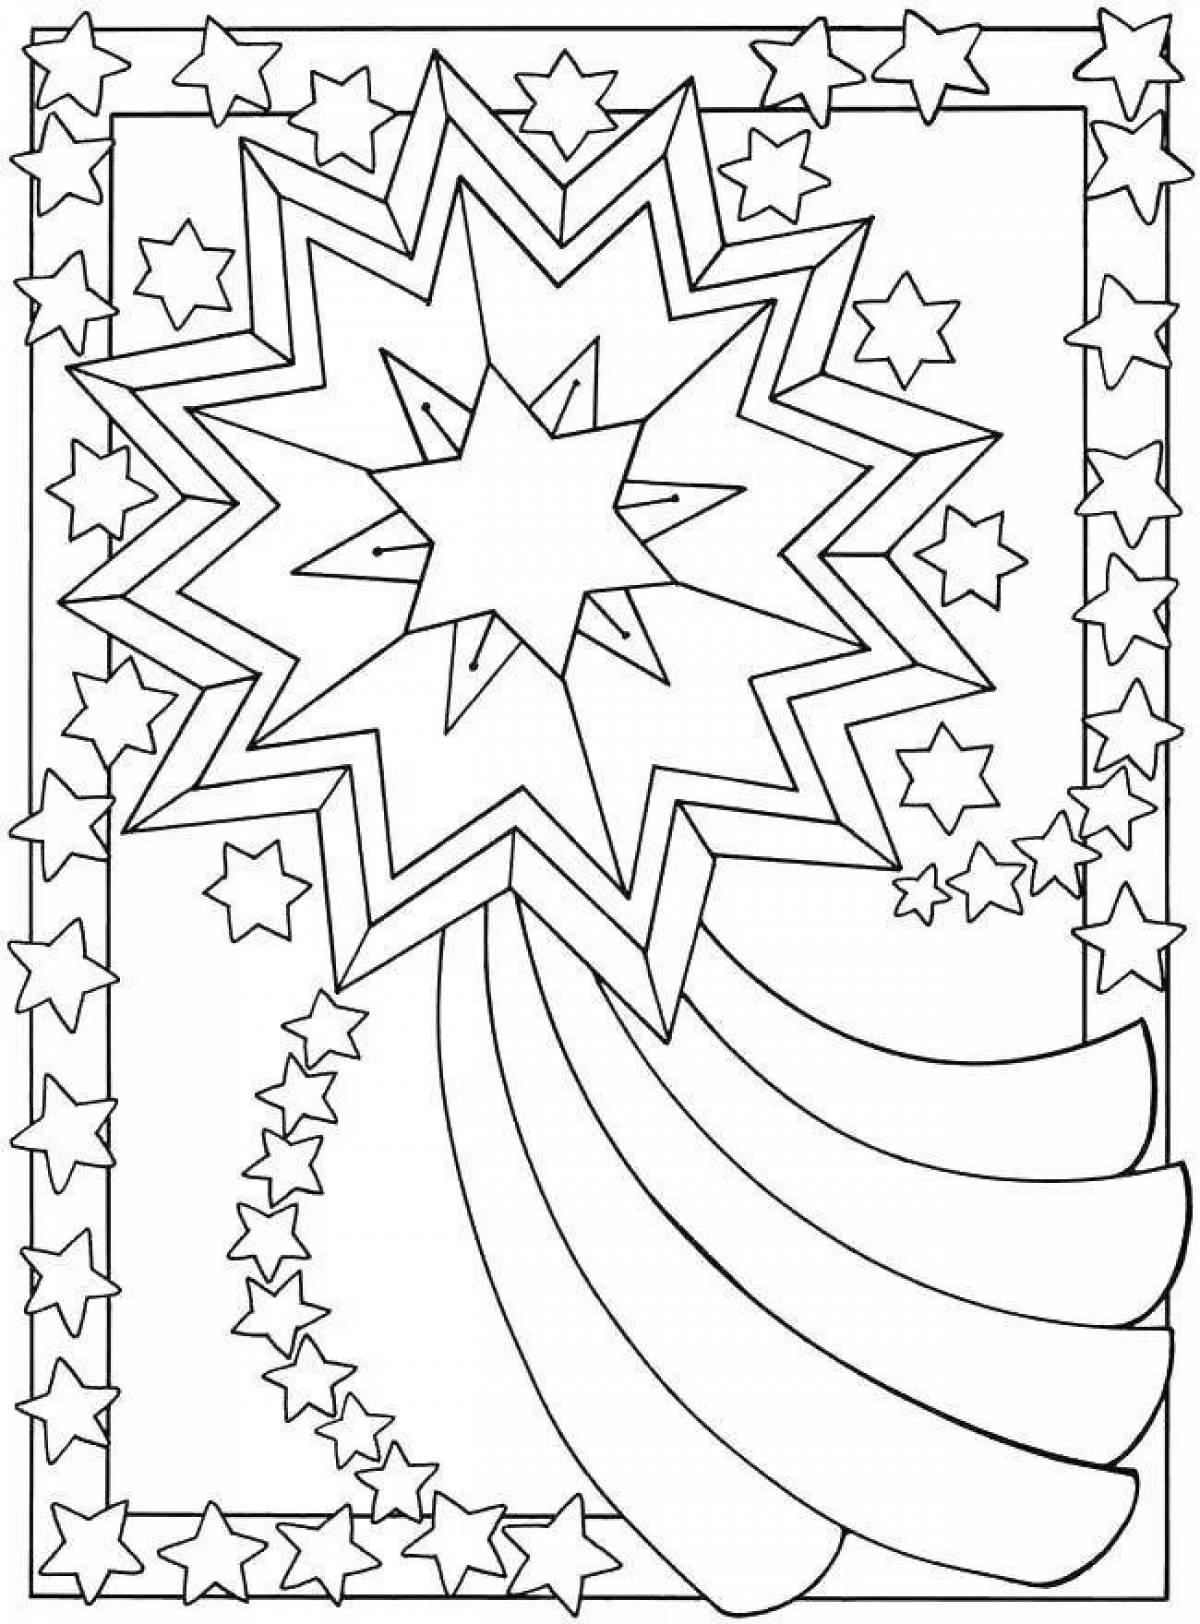 Star of Bethlehem #8